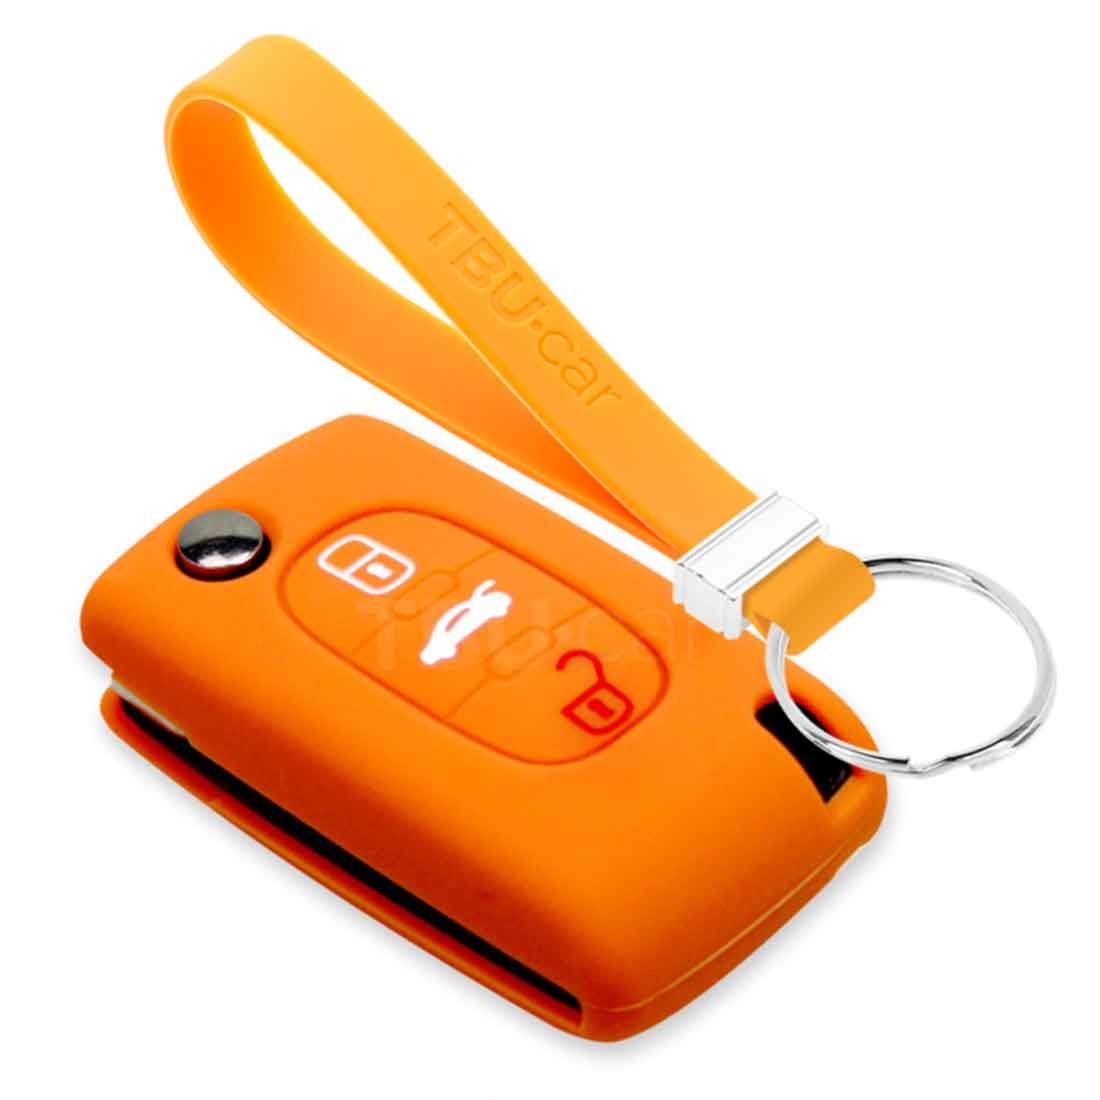 TBU car TBU car Autoschlüssel Hülle kompatibel mit Fiat 3 Tasten - Schutzhülle aus Silikon - Auto Schlüsselhülle Cover in Orange